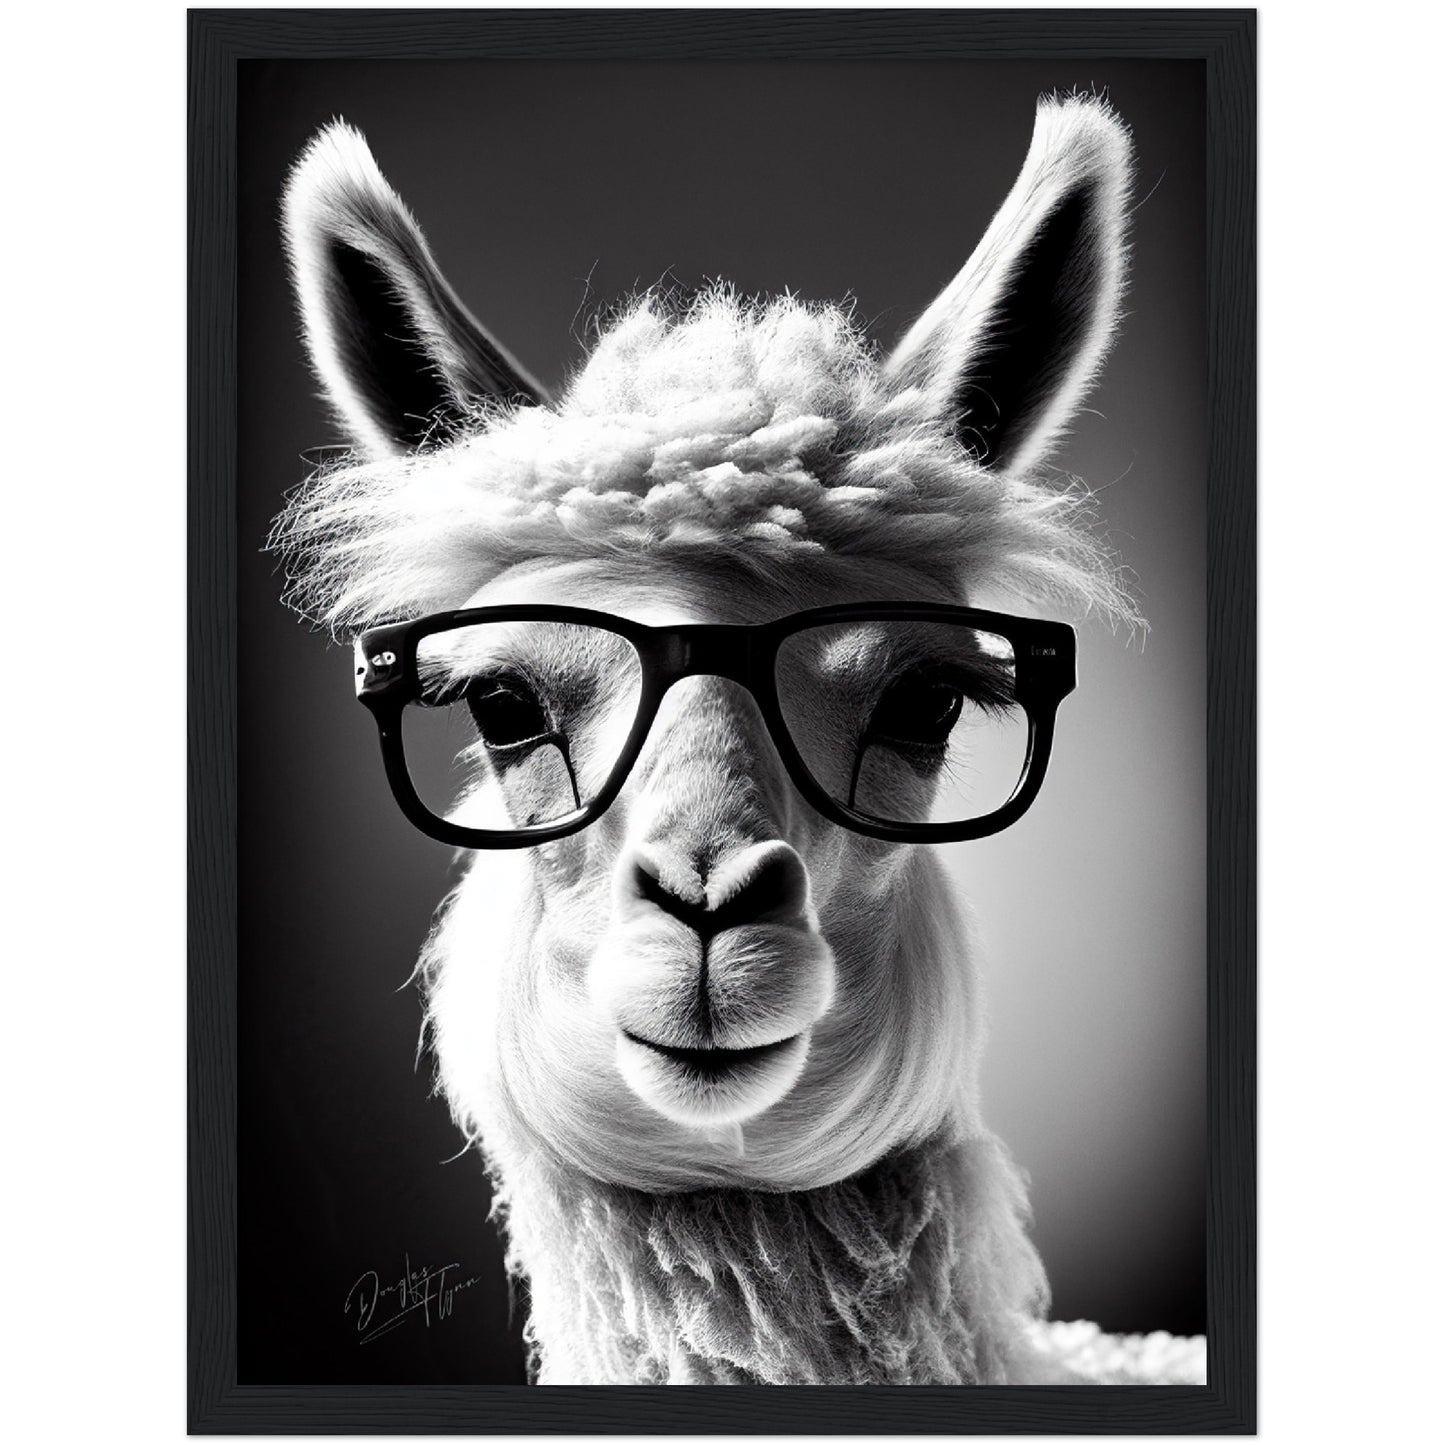 »Llama Logic« retro poster